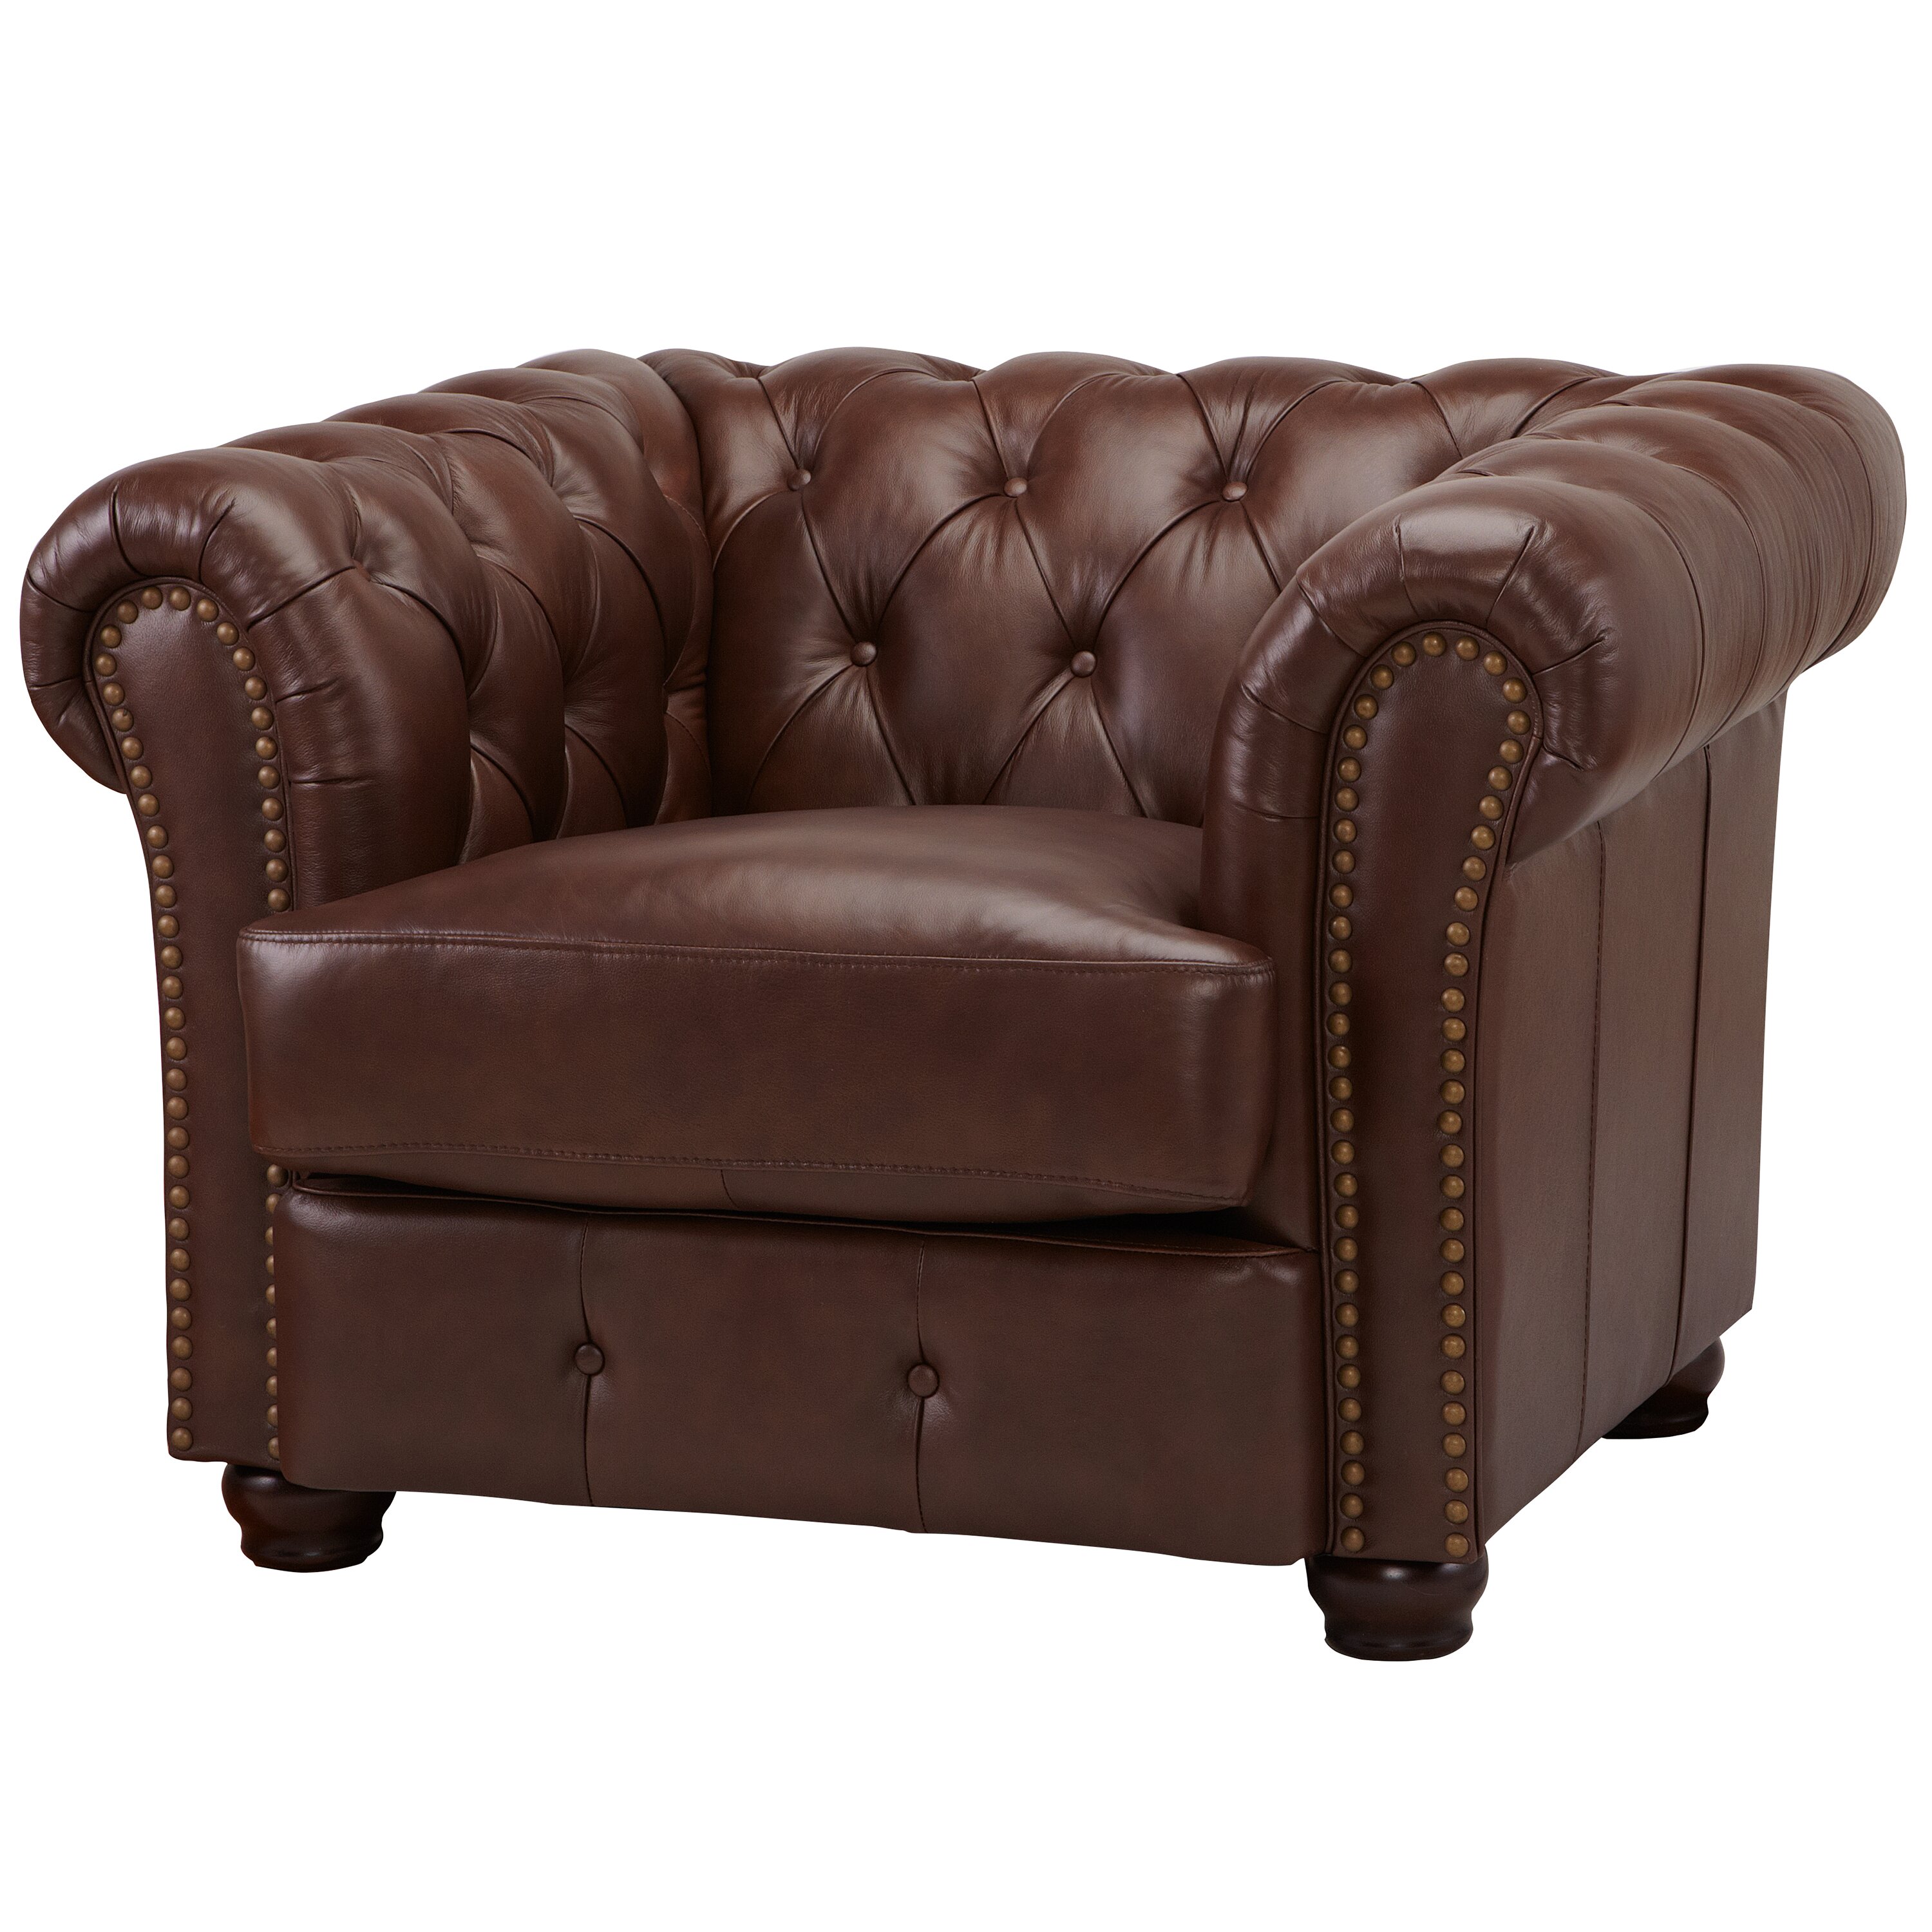 DLND DeCoro Barrister Stationary Leather Arm Chair | Wayfair